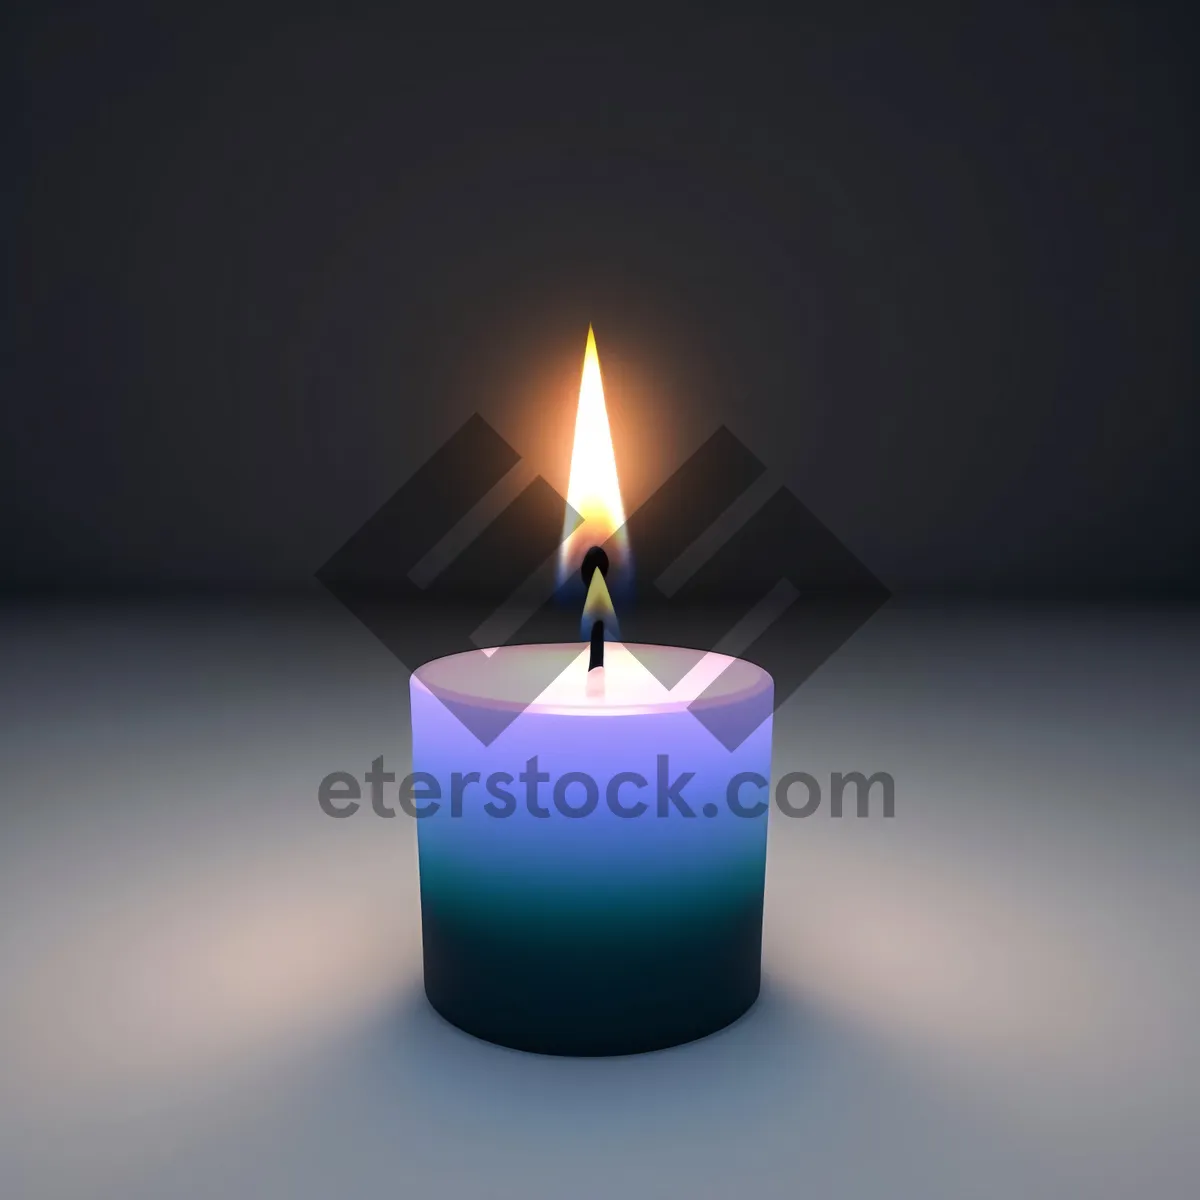 Picture of Celebration Glow: Illuminating Candlelight for Holiday Decor